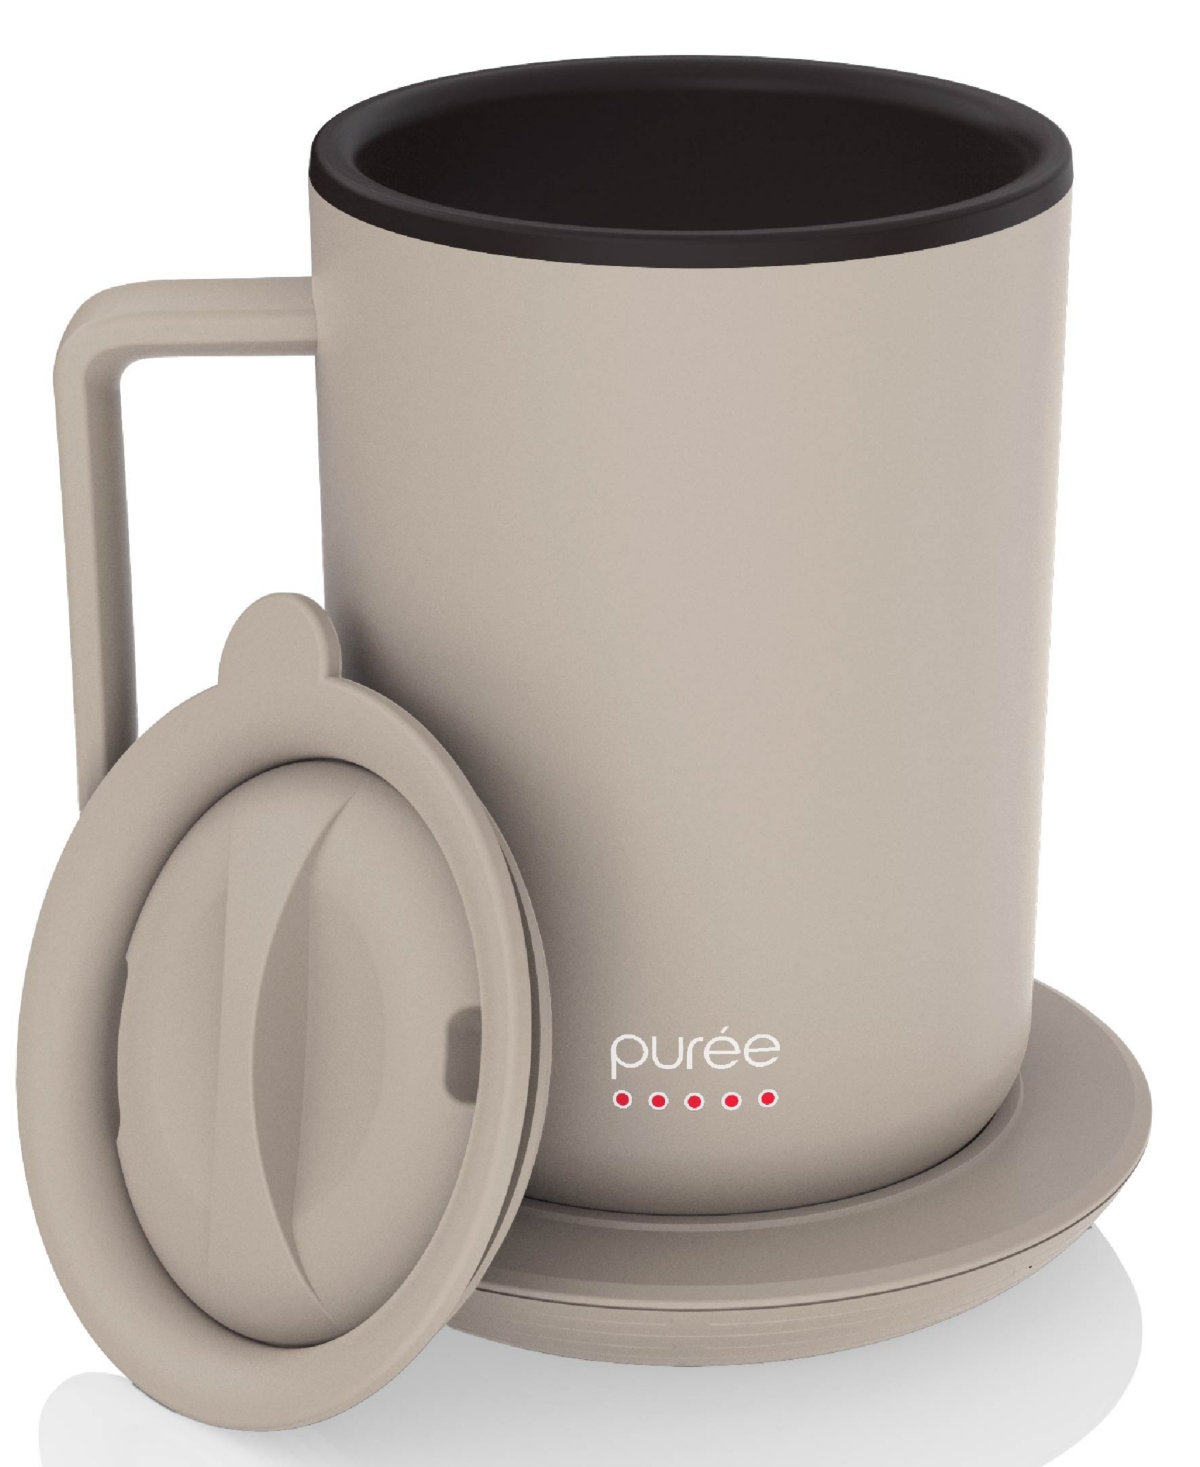 Tzumi Puree Warming Coffee Mug, 12 Oz. Stainless Steel Coffee Mug With Mug Warmer Coaster And Lid In Gray